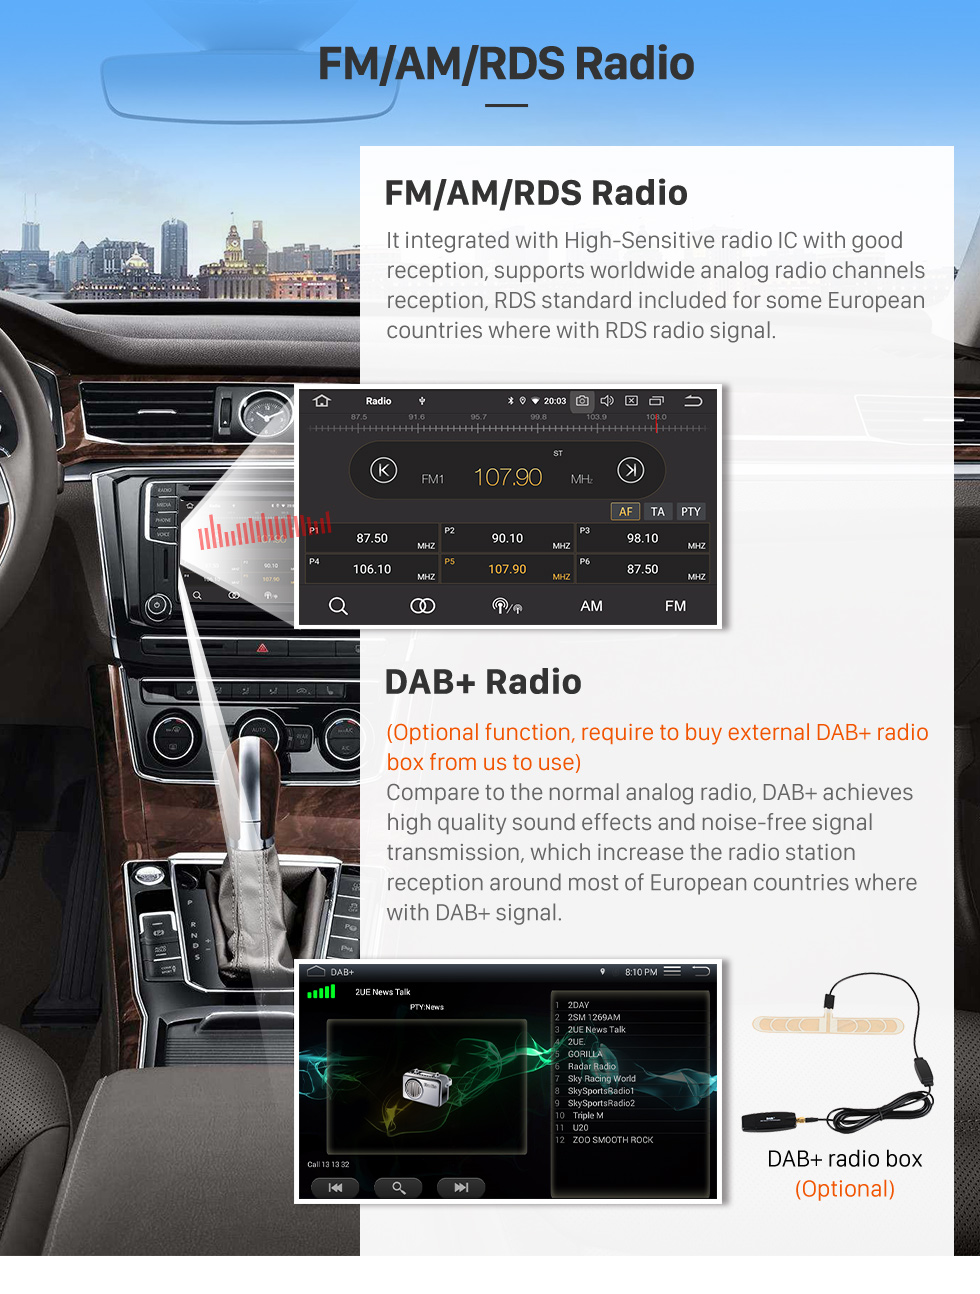 Seicane 7 polegadas Android 11.0 HD Touchscreen GPS Navigation Radio para 2005-2012 Mercedes Benz ML CLASSE W164 ML350 ML430 ML450 ML500/GL CLASSE X164 GL320 com Carplay Bluetooth suporte Mirror Link